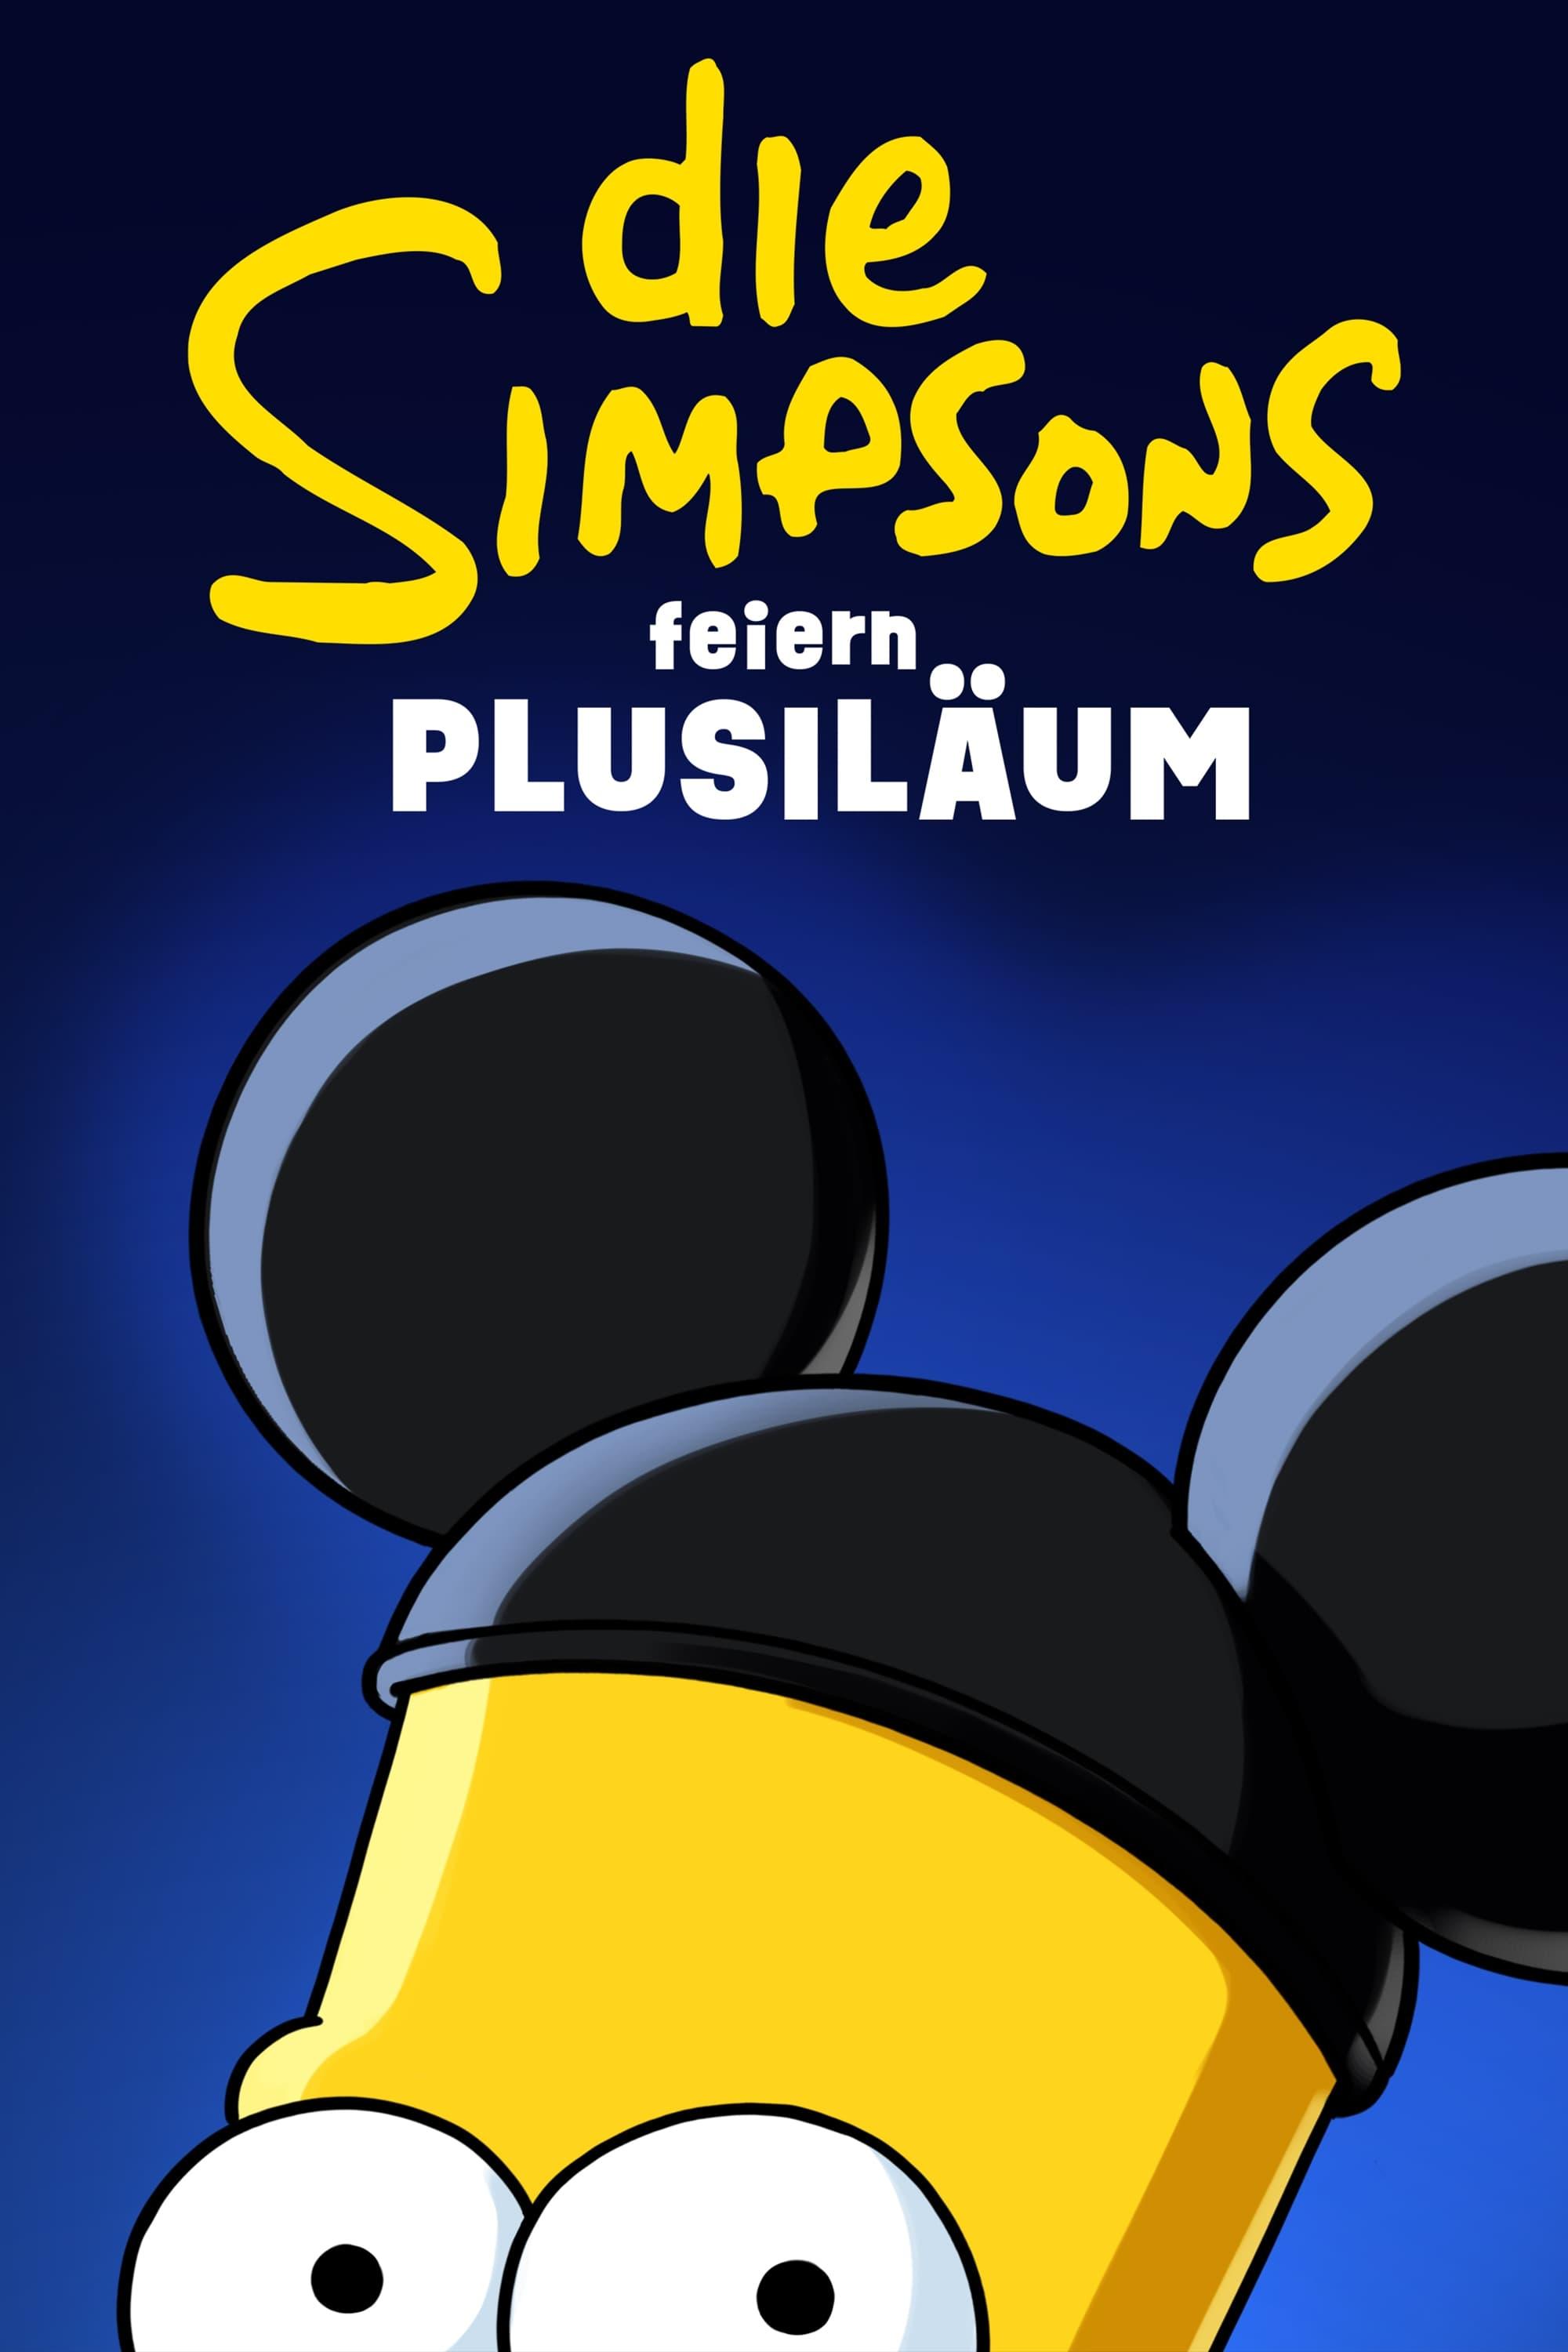 Die Simpsons feiern Plusiläum poster